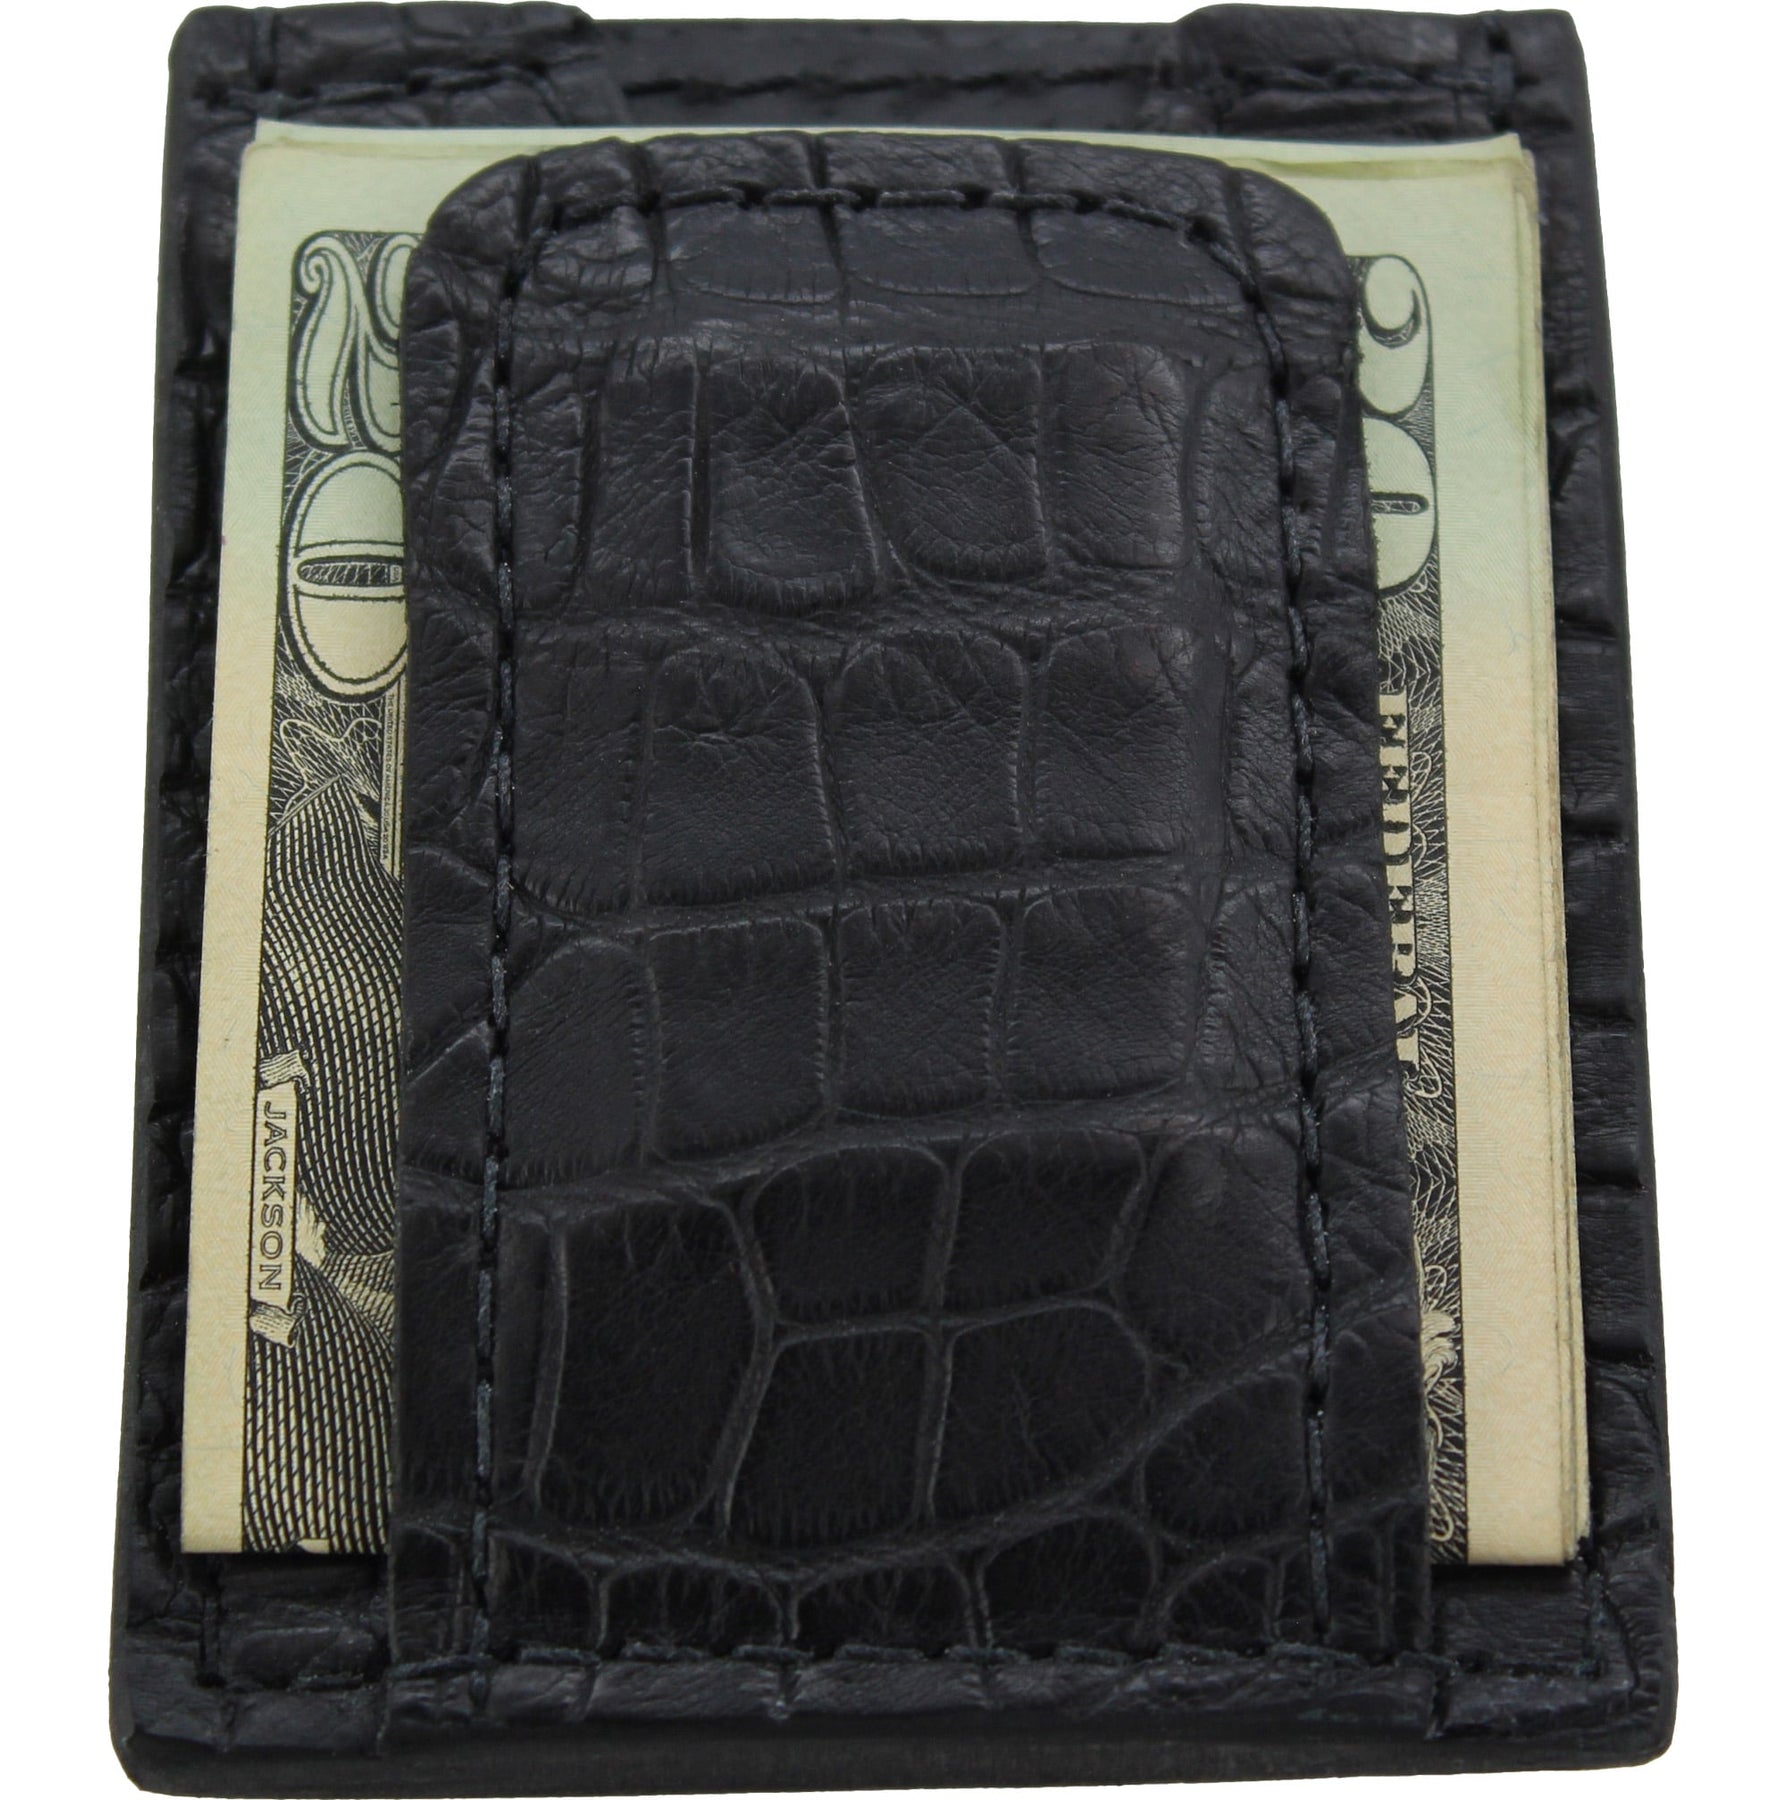 Dark Brown Magnetic Money Clip Wallet, Size: 3 X 4 Inch